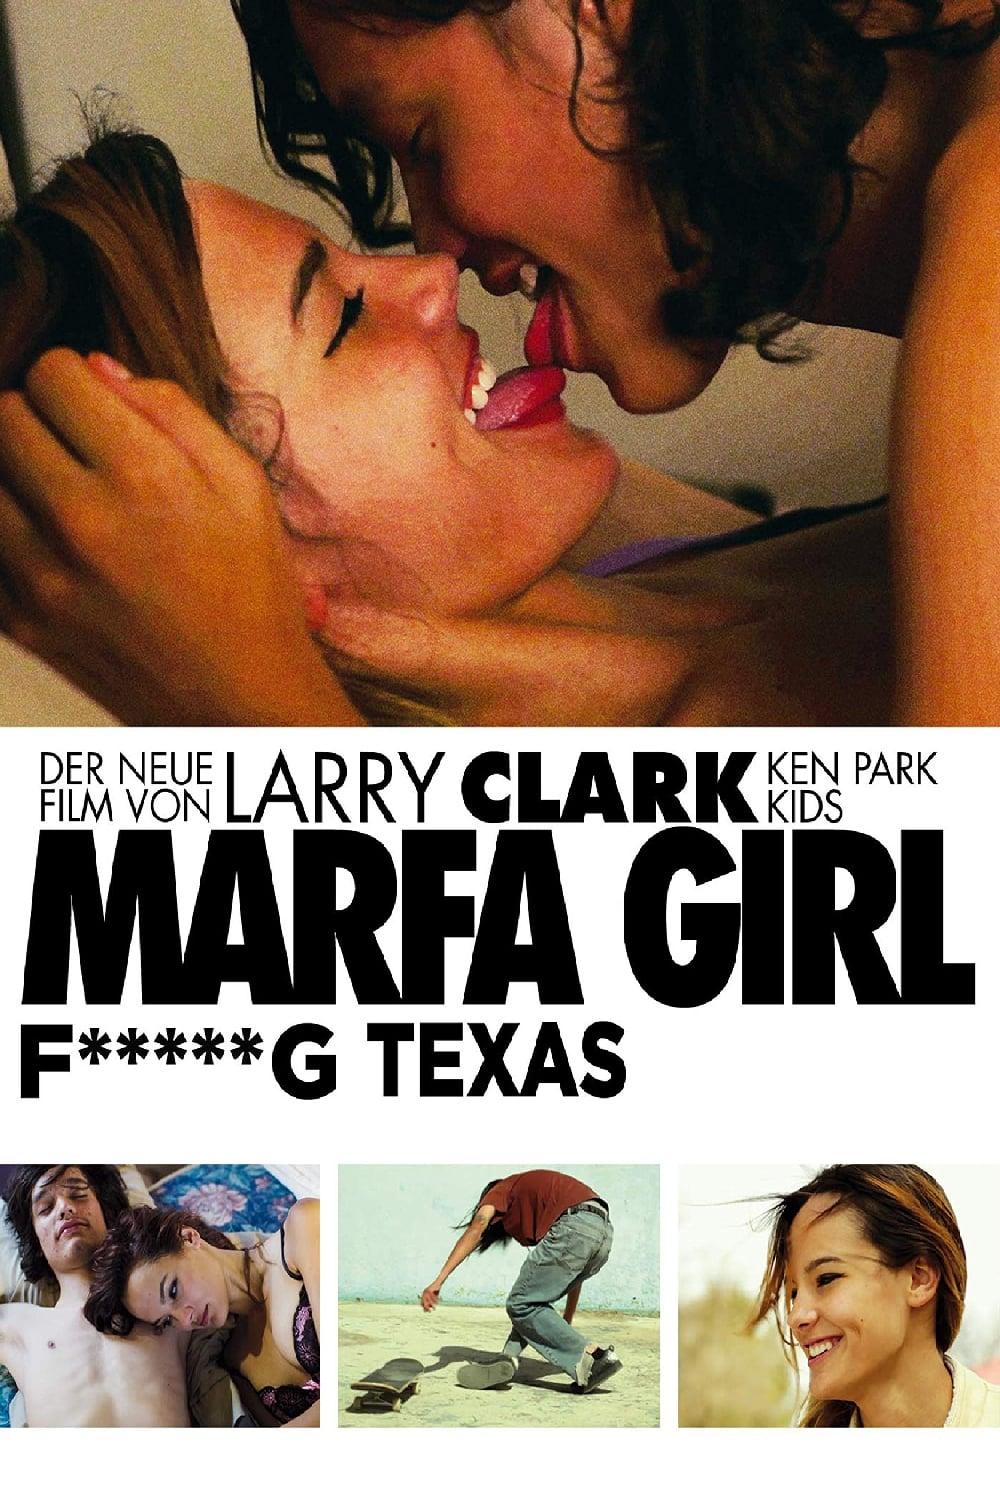 Marfa Girl - Fucking Texas poster